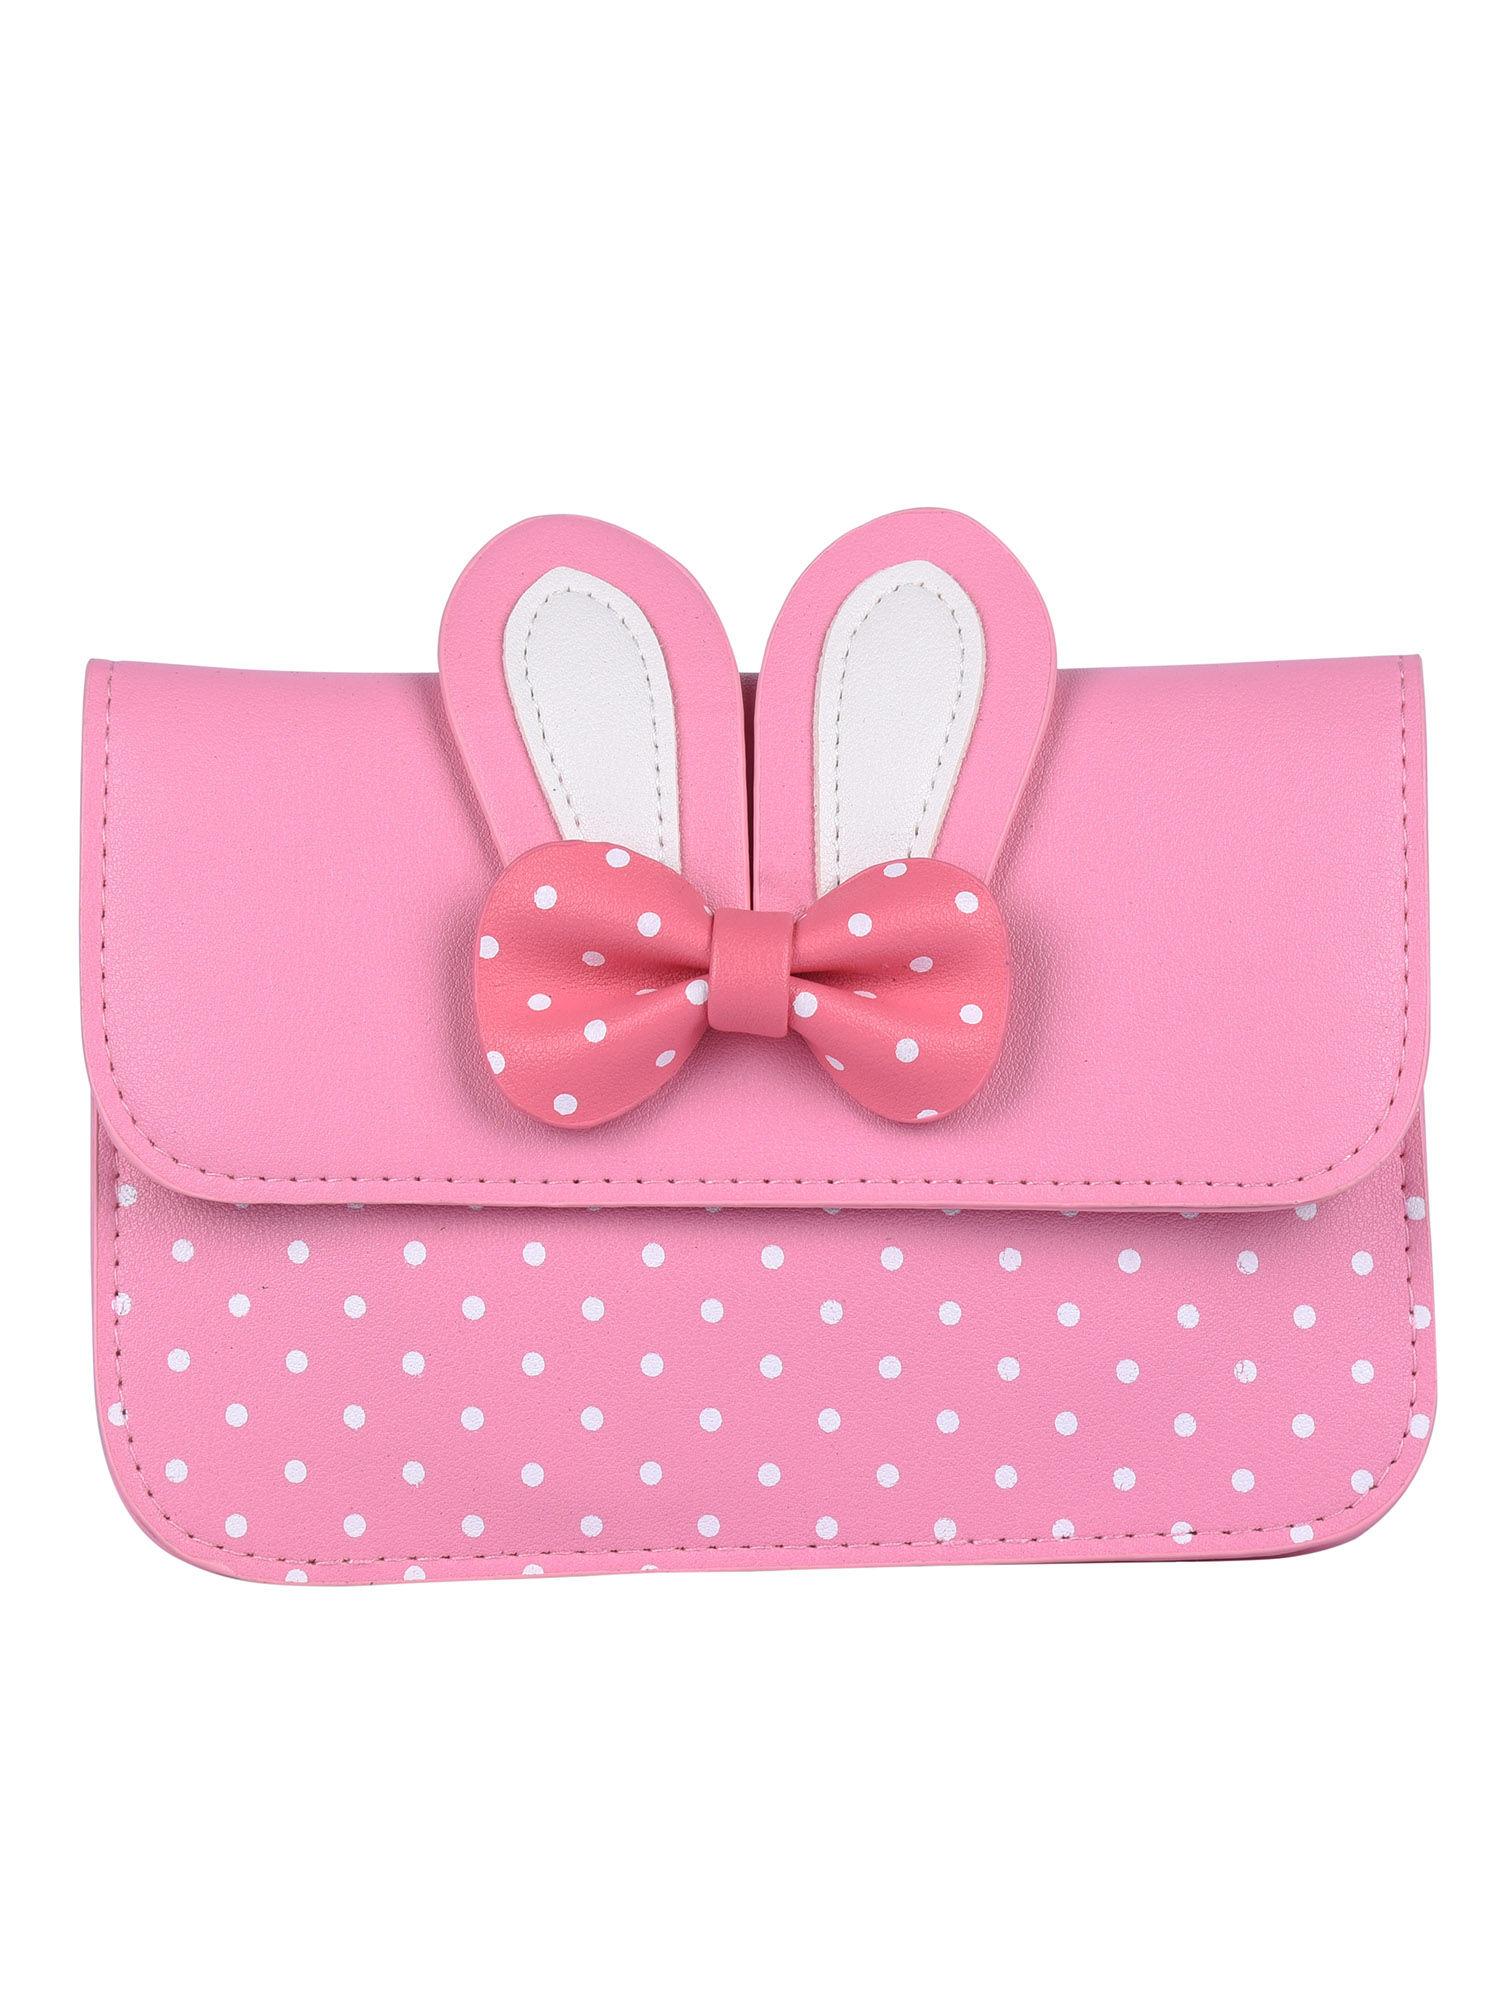 pink polka dot sling bag